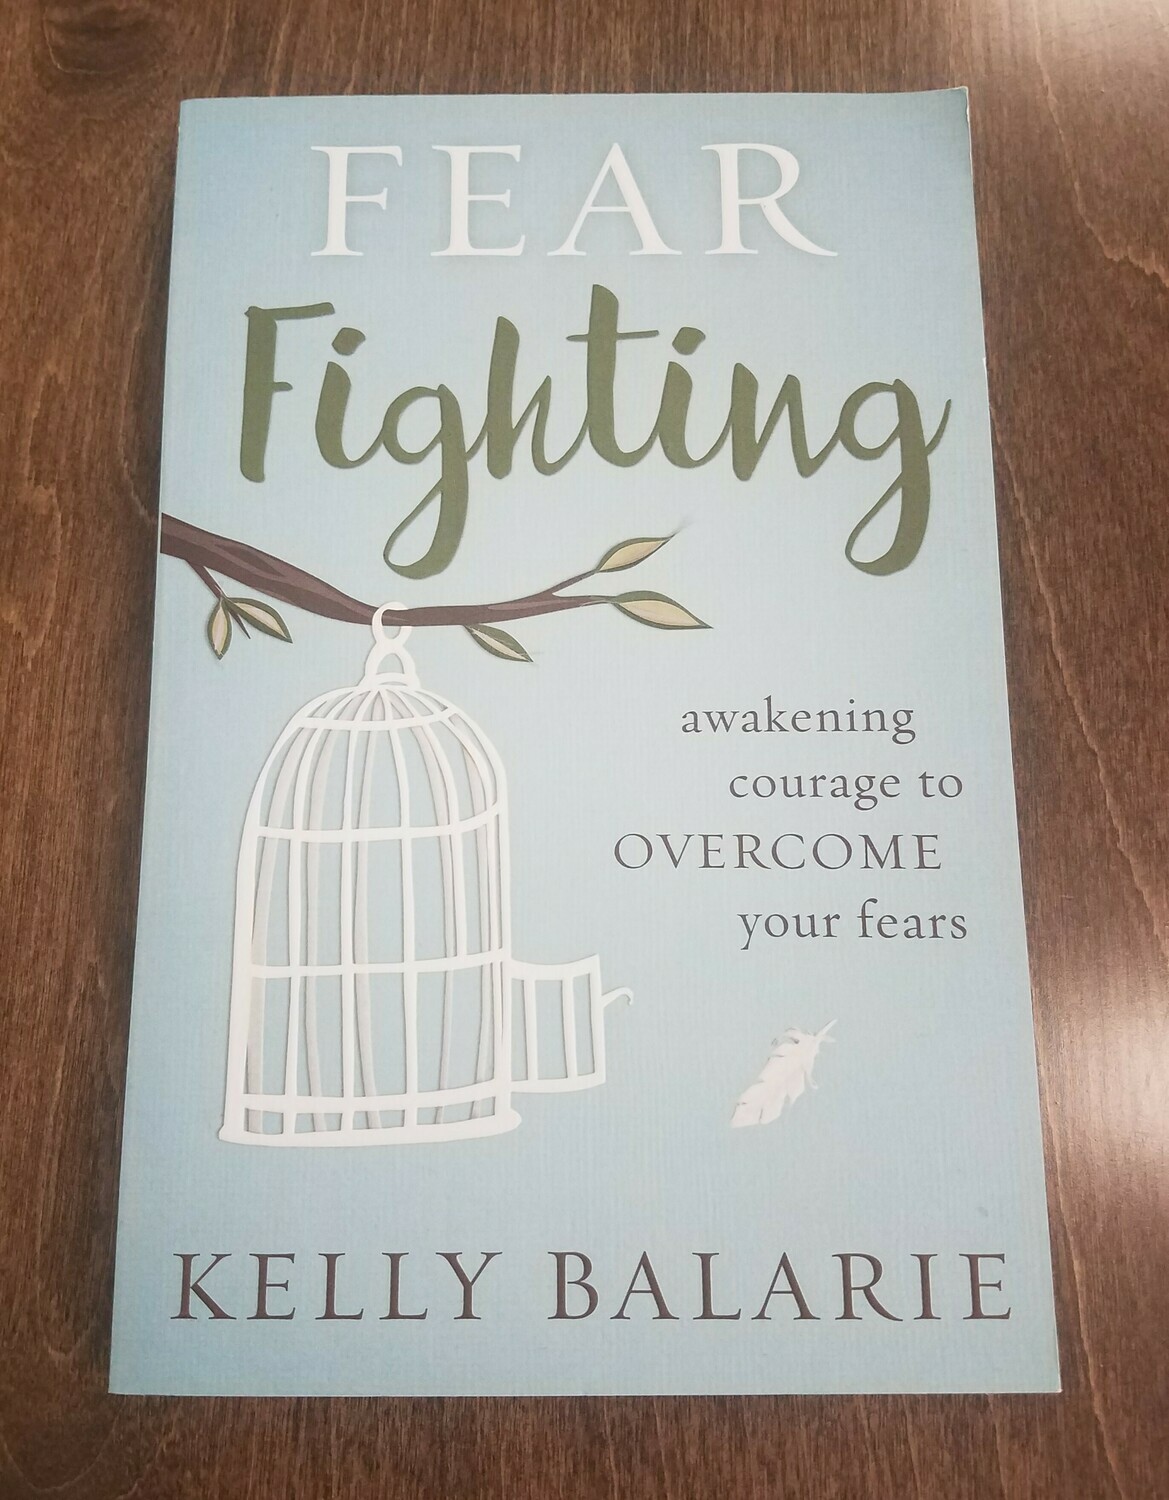 Fear Fighting by Kelly Balarie